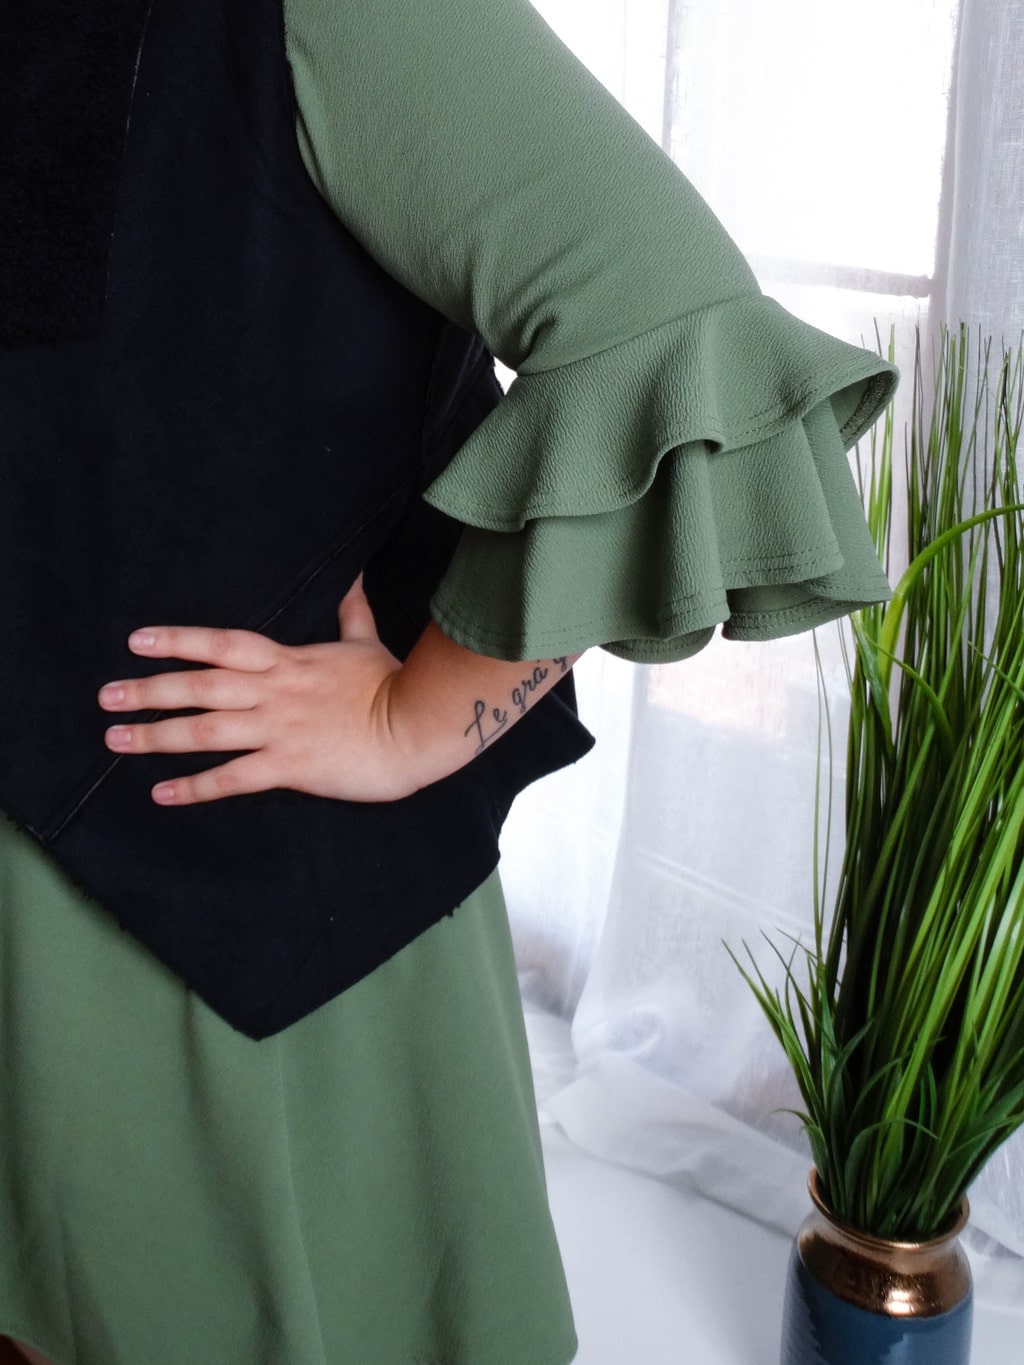 Sydney's green dress has layered ruffle sleeves.